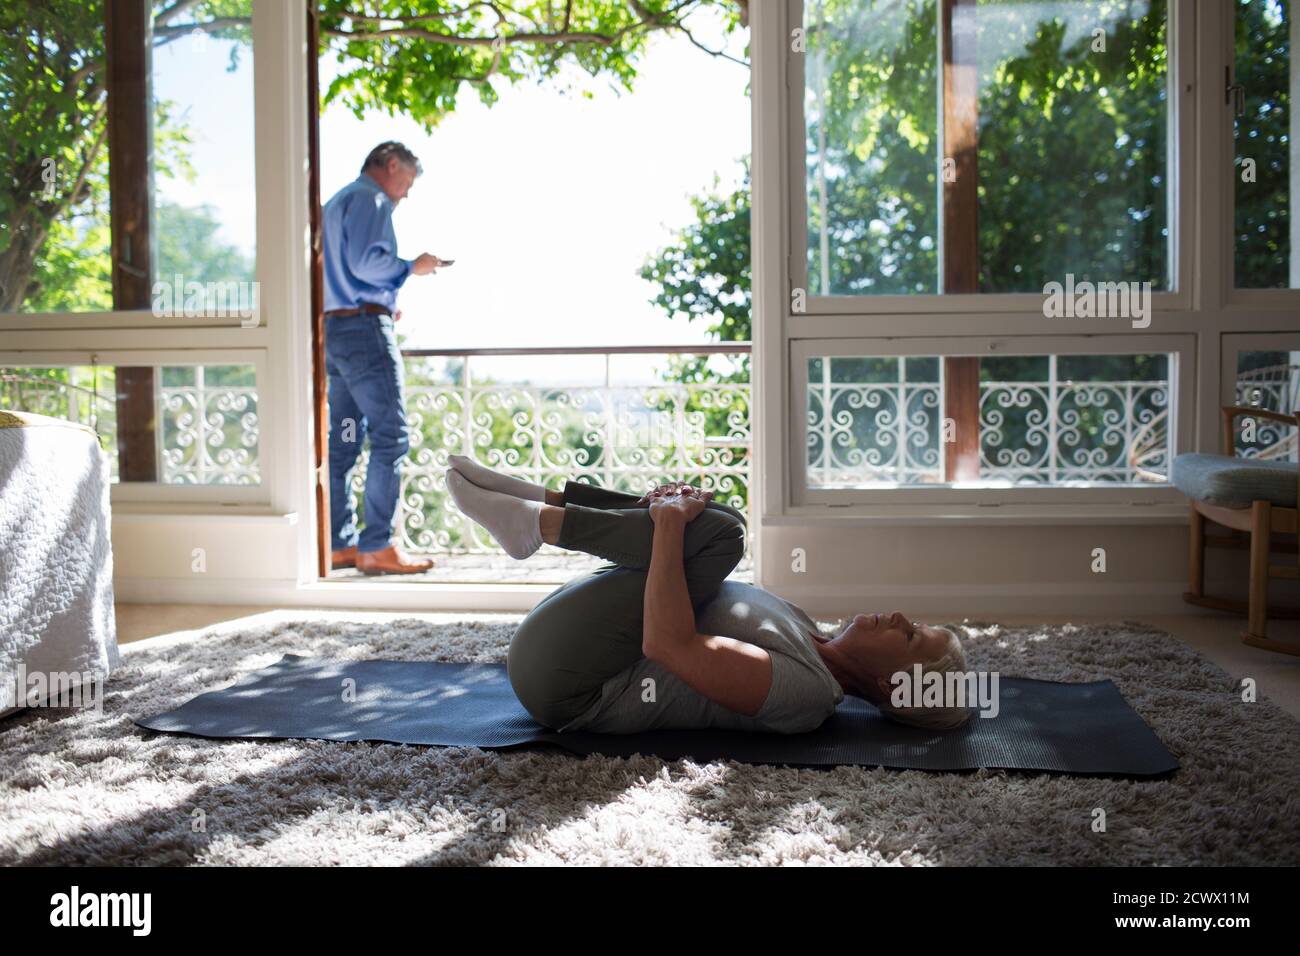 Senior woman stretching on yoga mat at summer balcony doorway Stock Photo